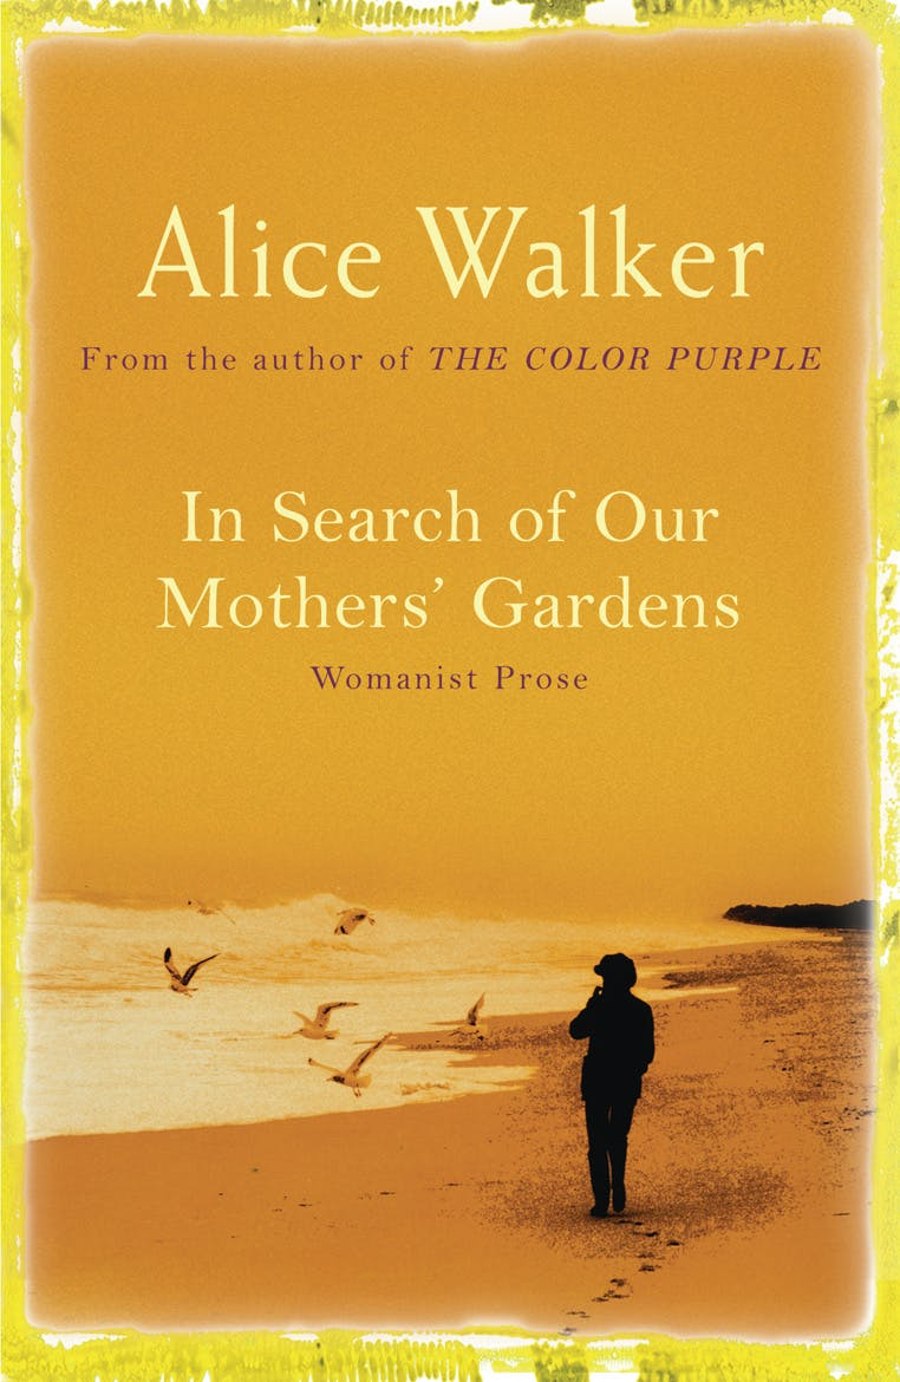 alice walker non-fiction book